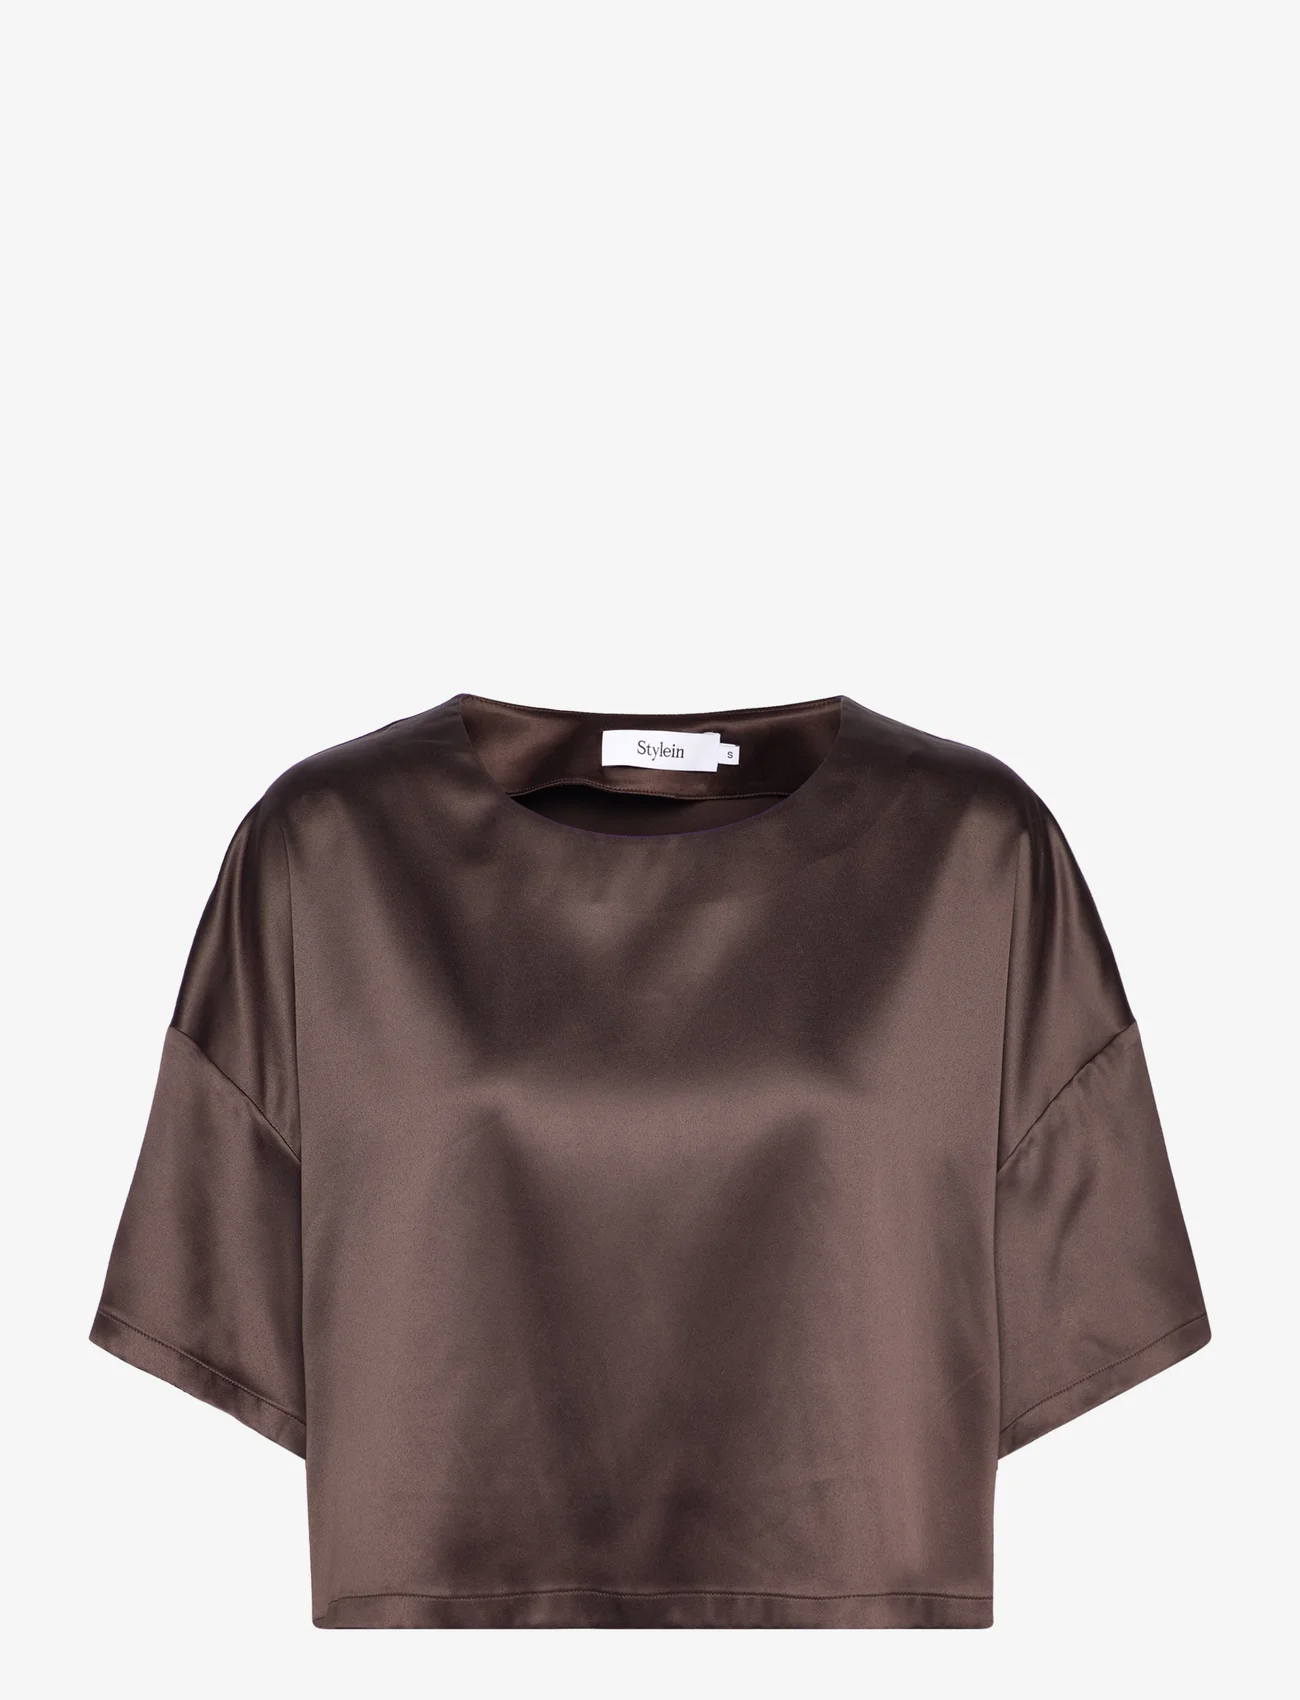 Stylein - MIMI T-SHIRT - blouses korte mouwen - brown - 0